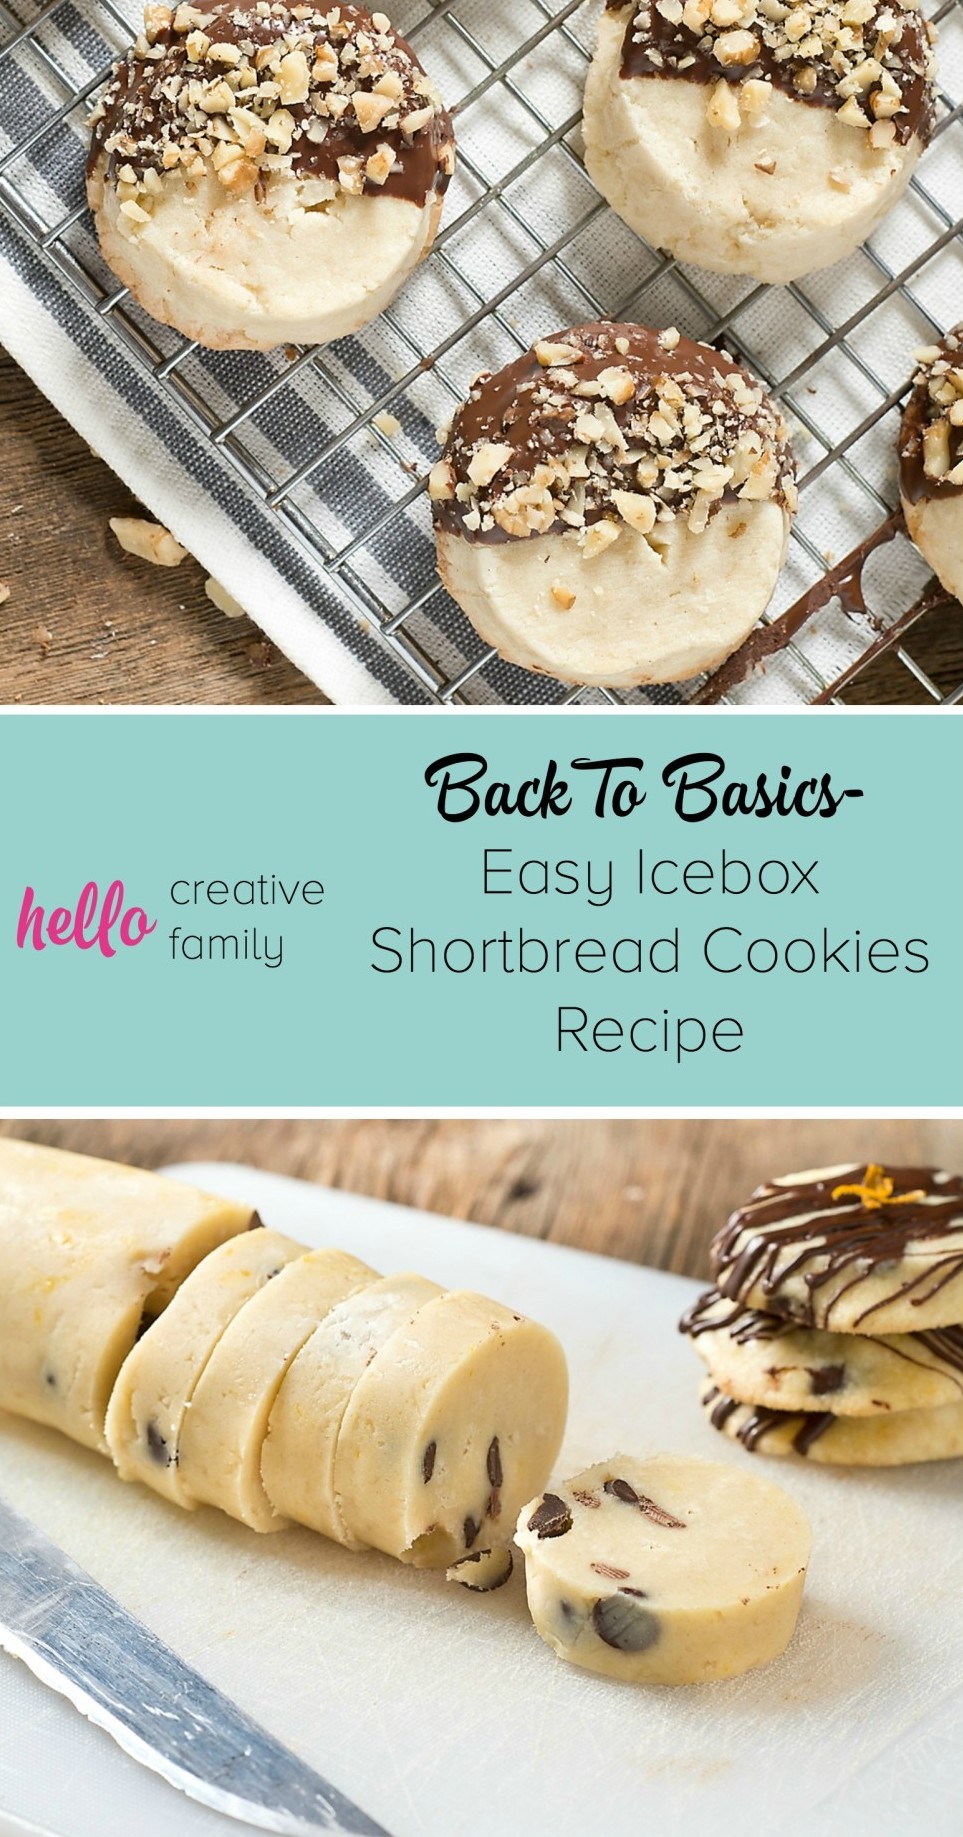 Back To Basics: Easy Icebox Shortbread Cookies Recipe